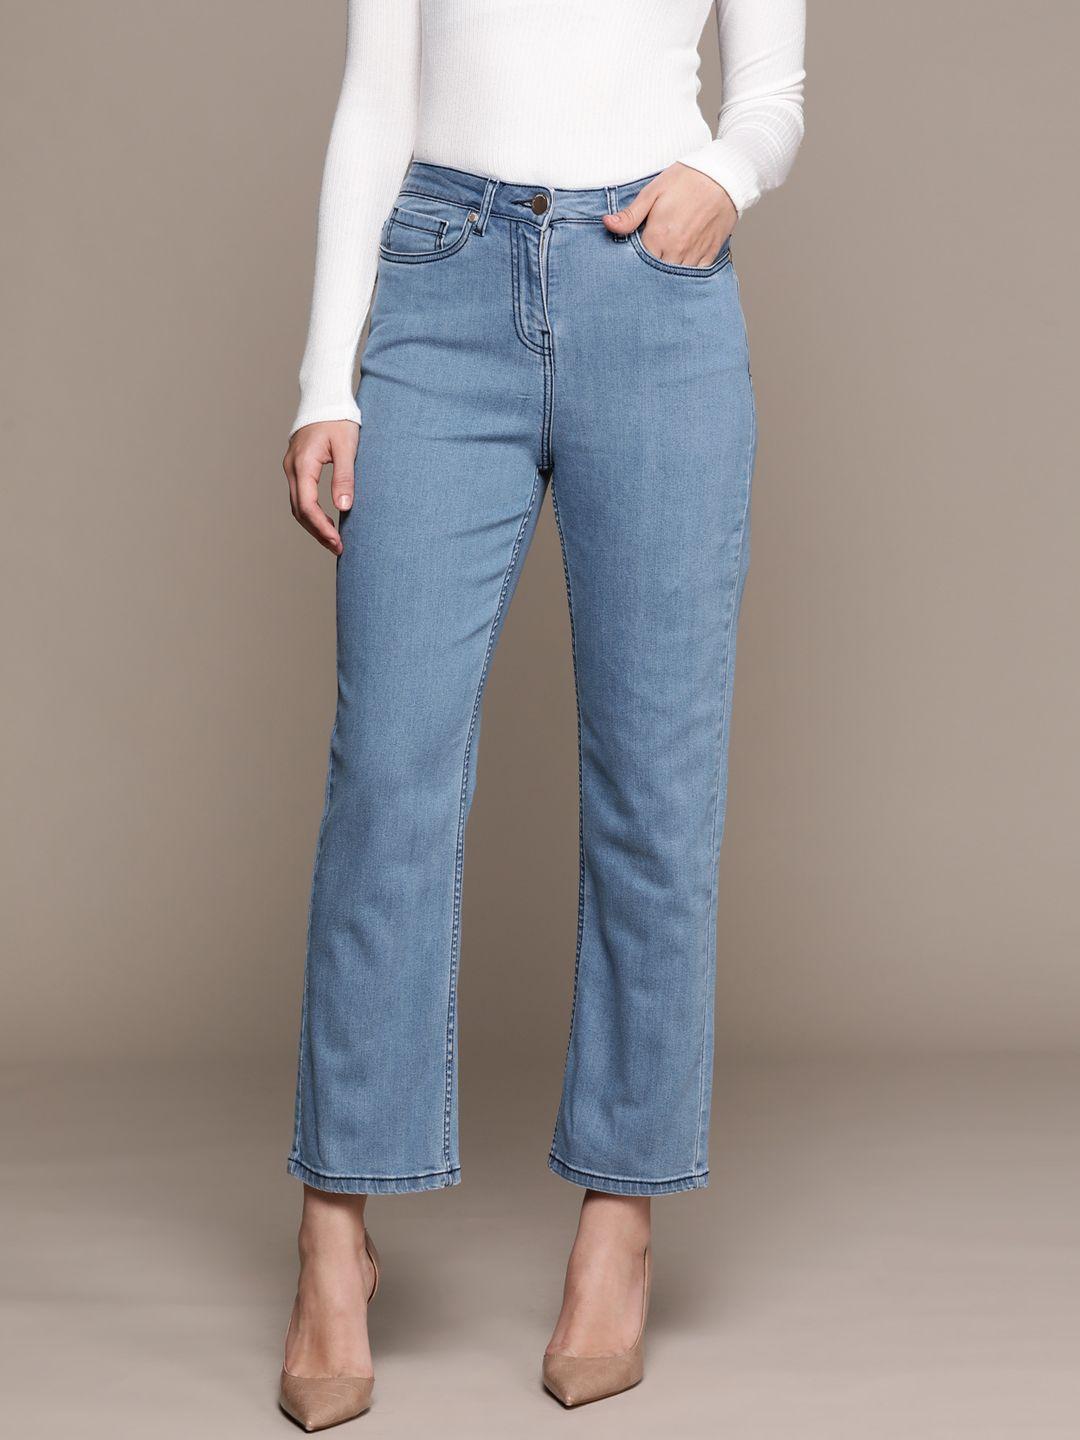 label ritu kumar women jean straight fit jeans